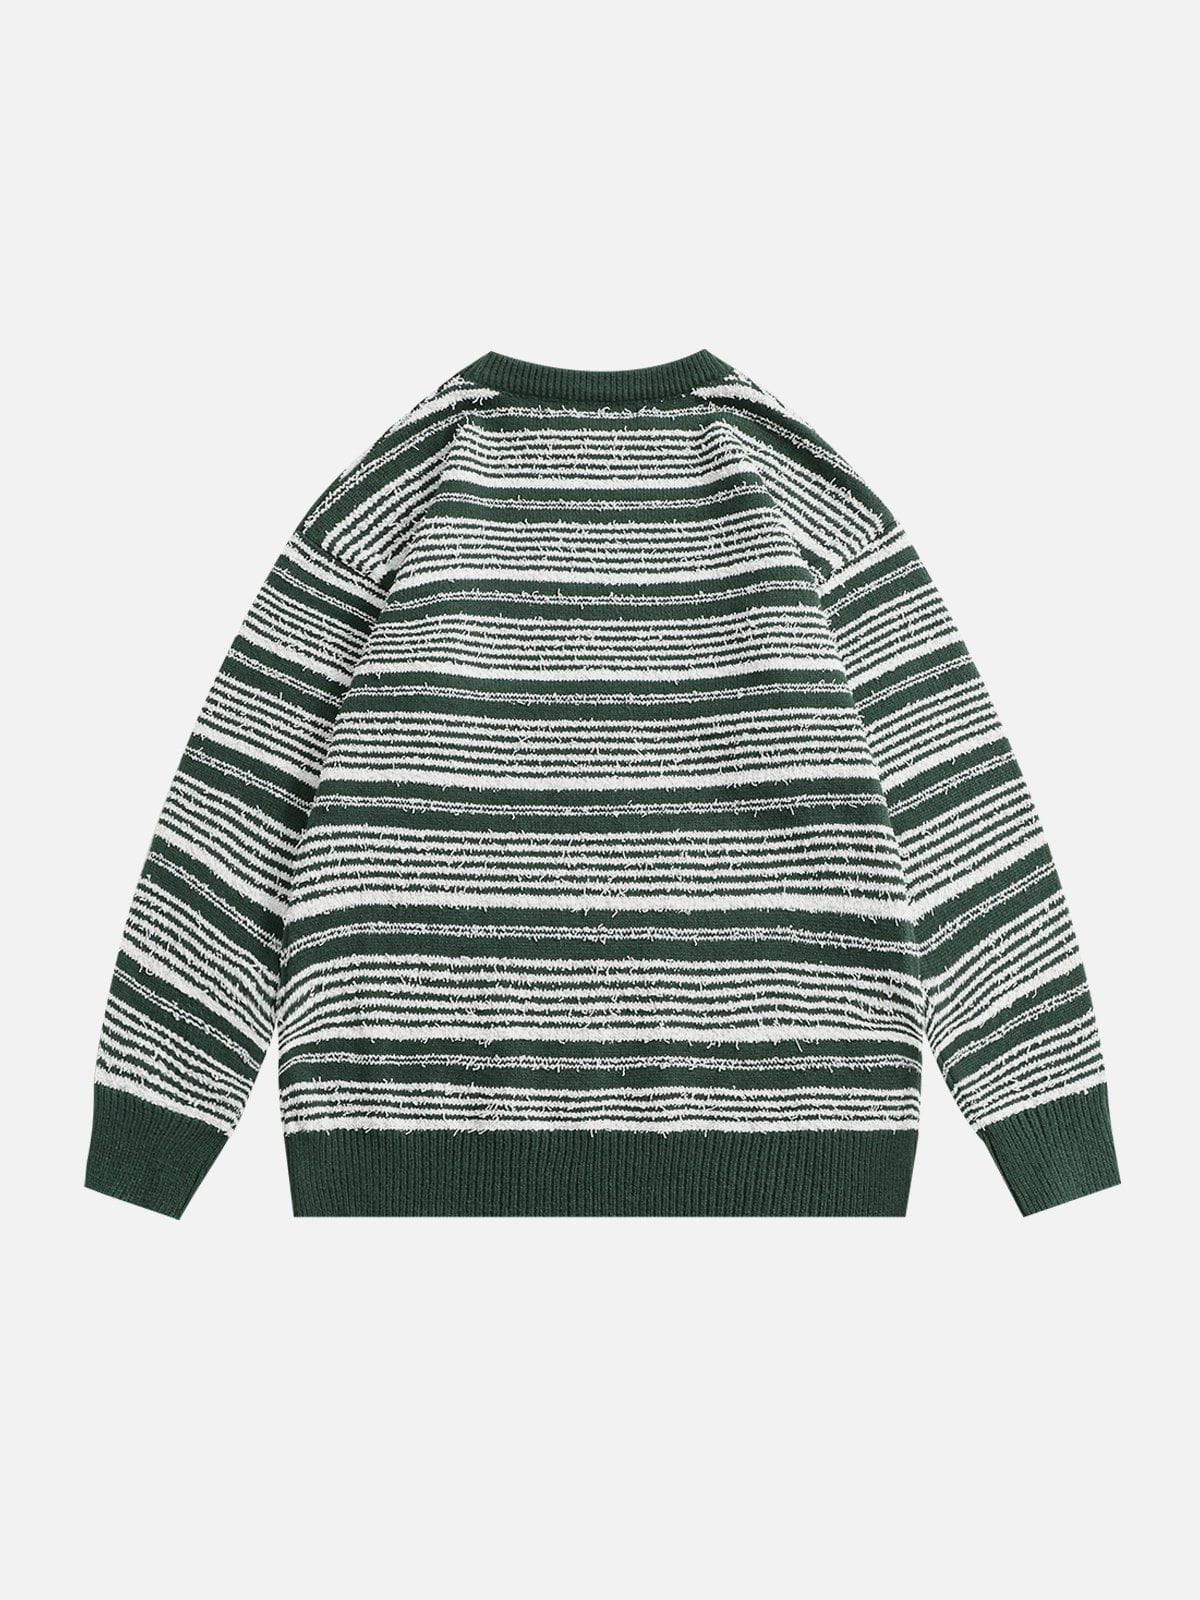 Majesda® - Vintage Stripe Design Sweater outfit ideas streetwear fashion